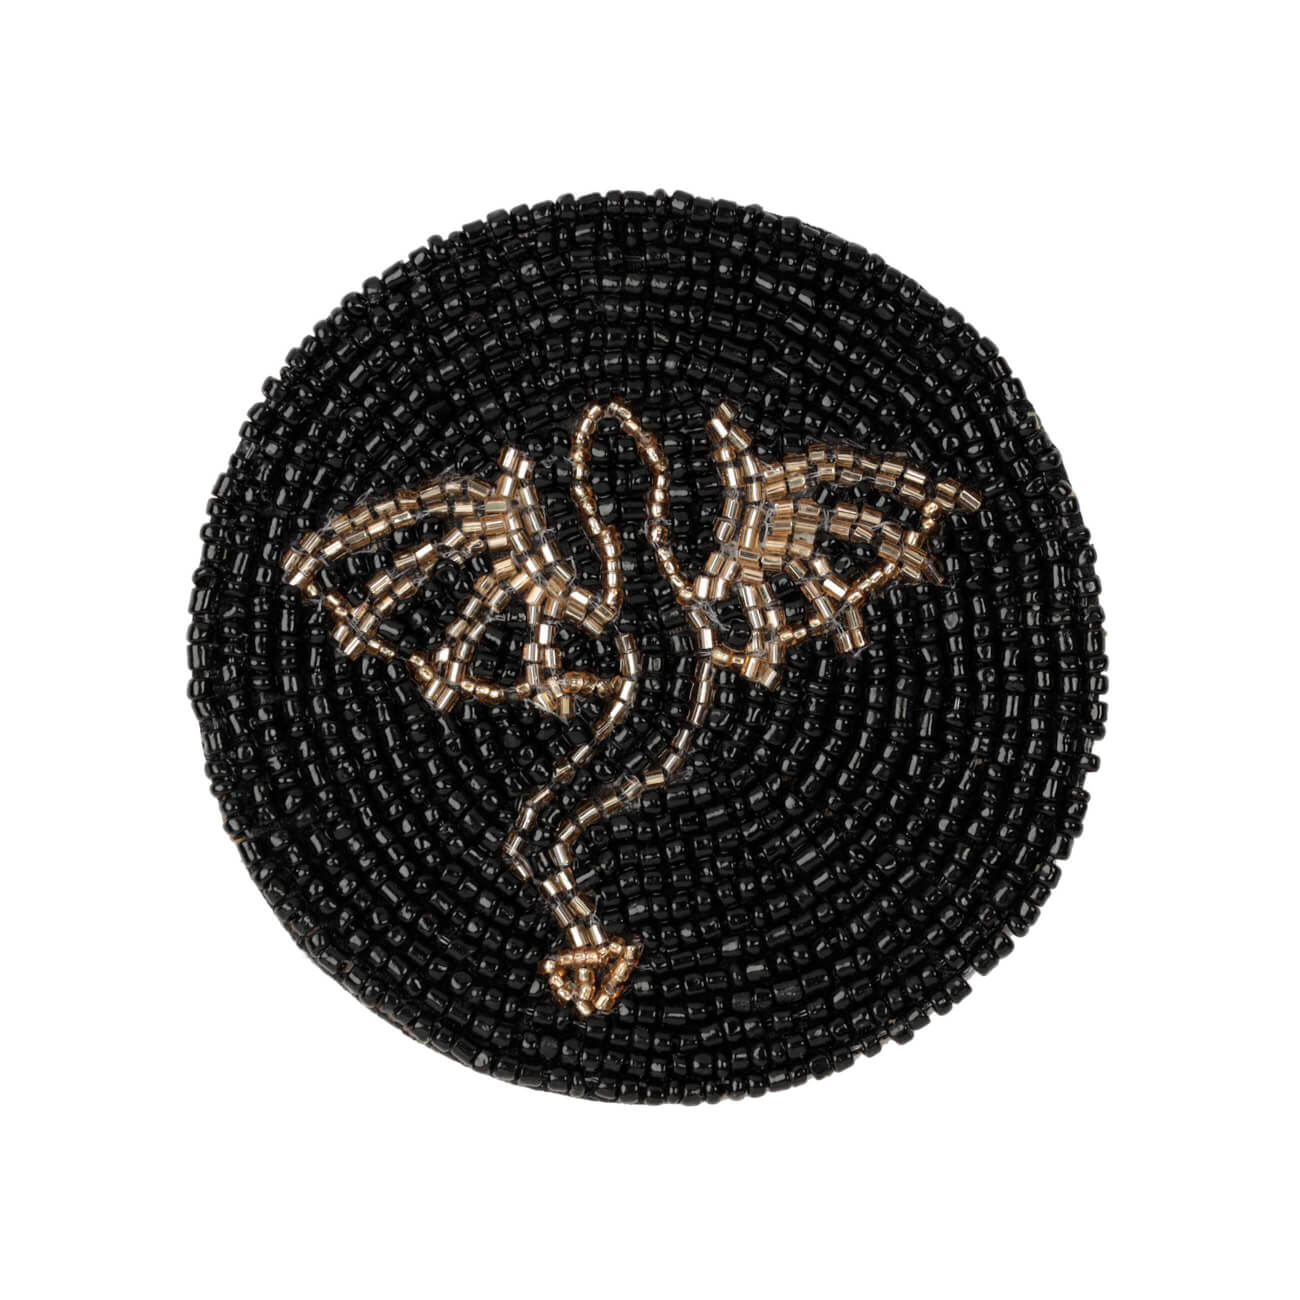 Подставка под кружку, 10 см, бисер, круглая, черная, Дракон, Art beads салфетка под приборы 36 см бисер круглая золотистая rotation beads